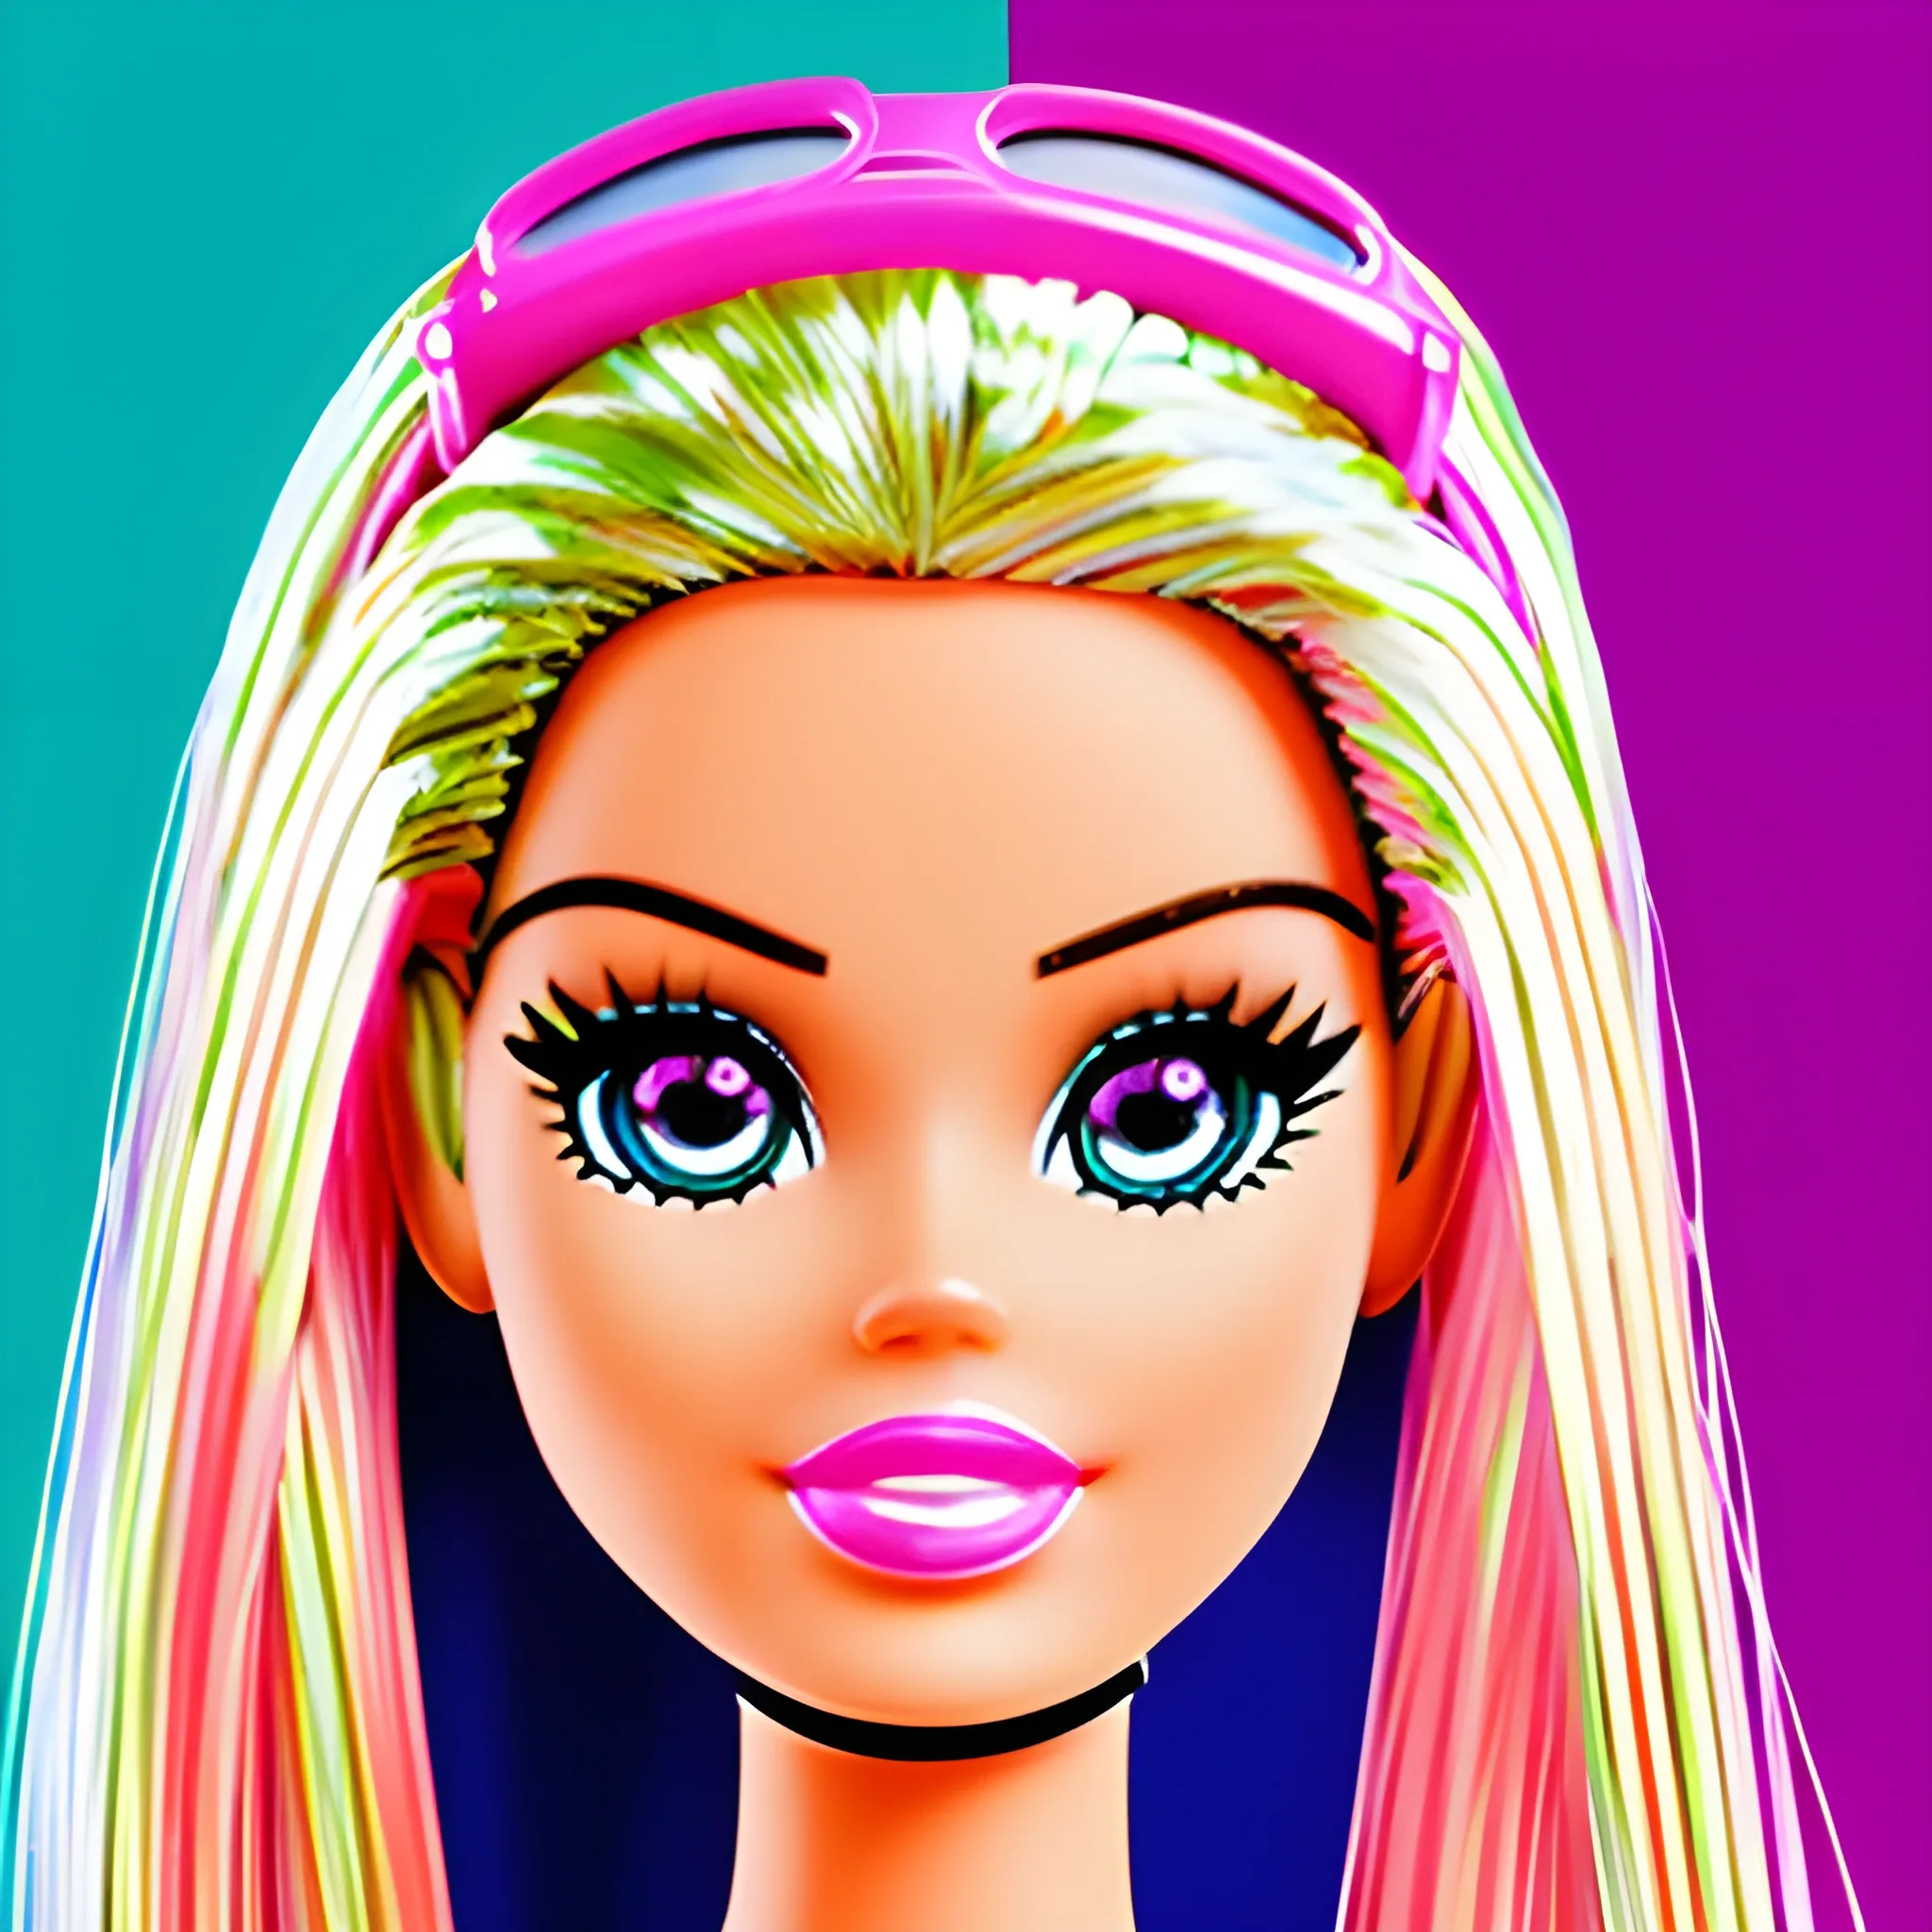 portrait barbie 90s
, Cartoon